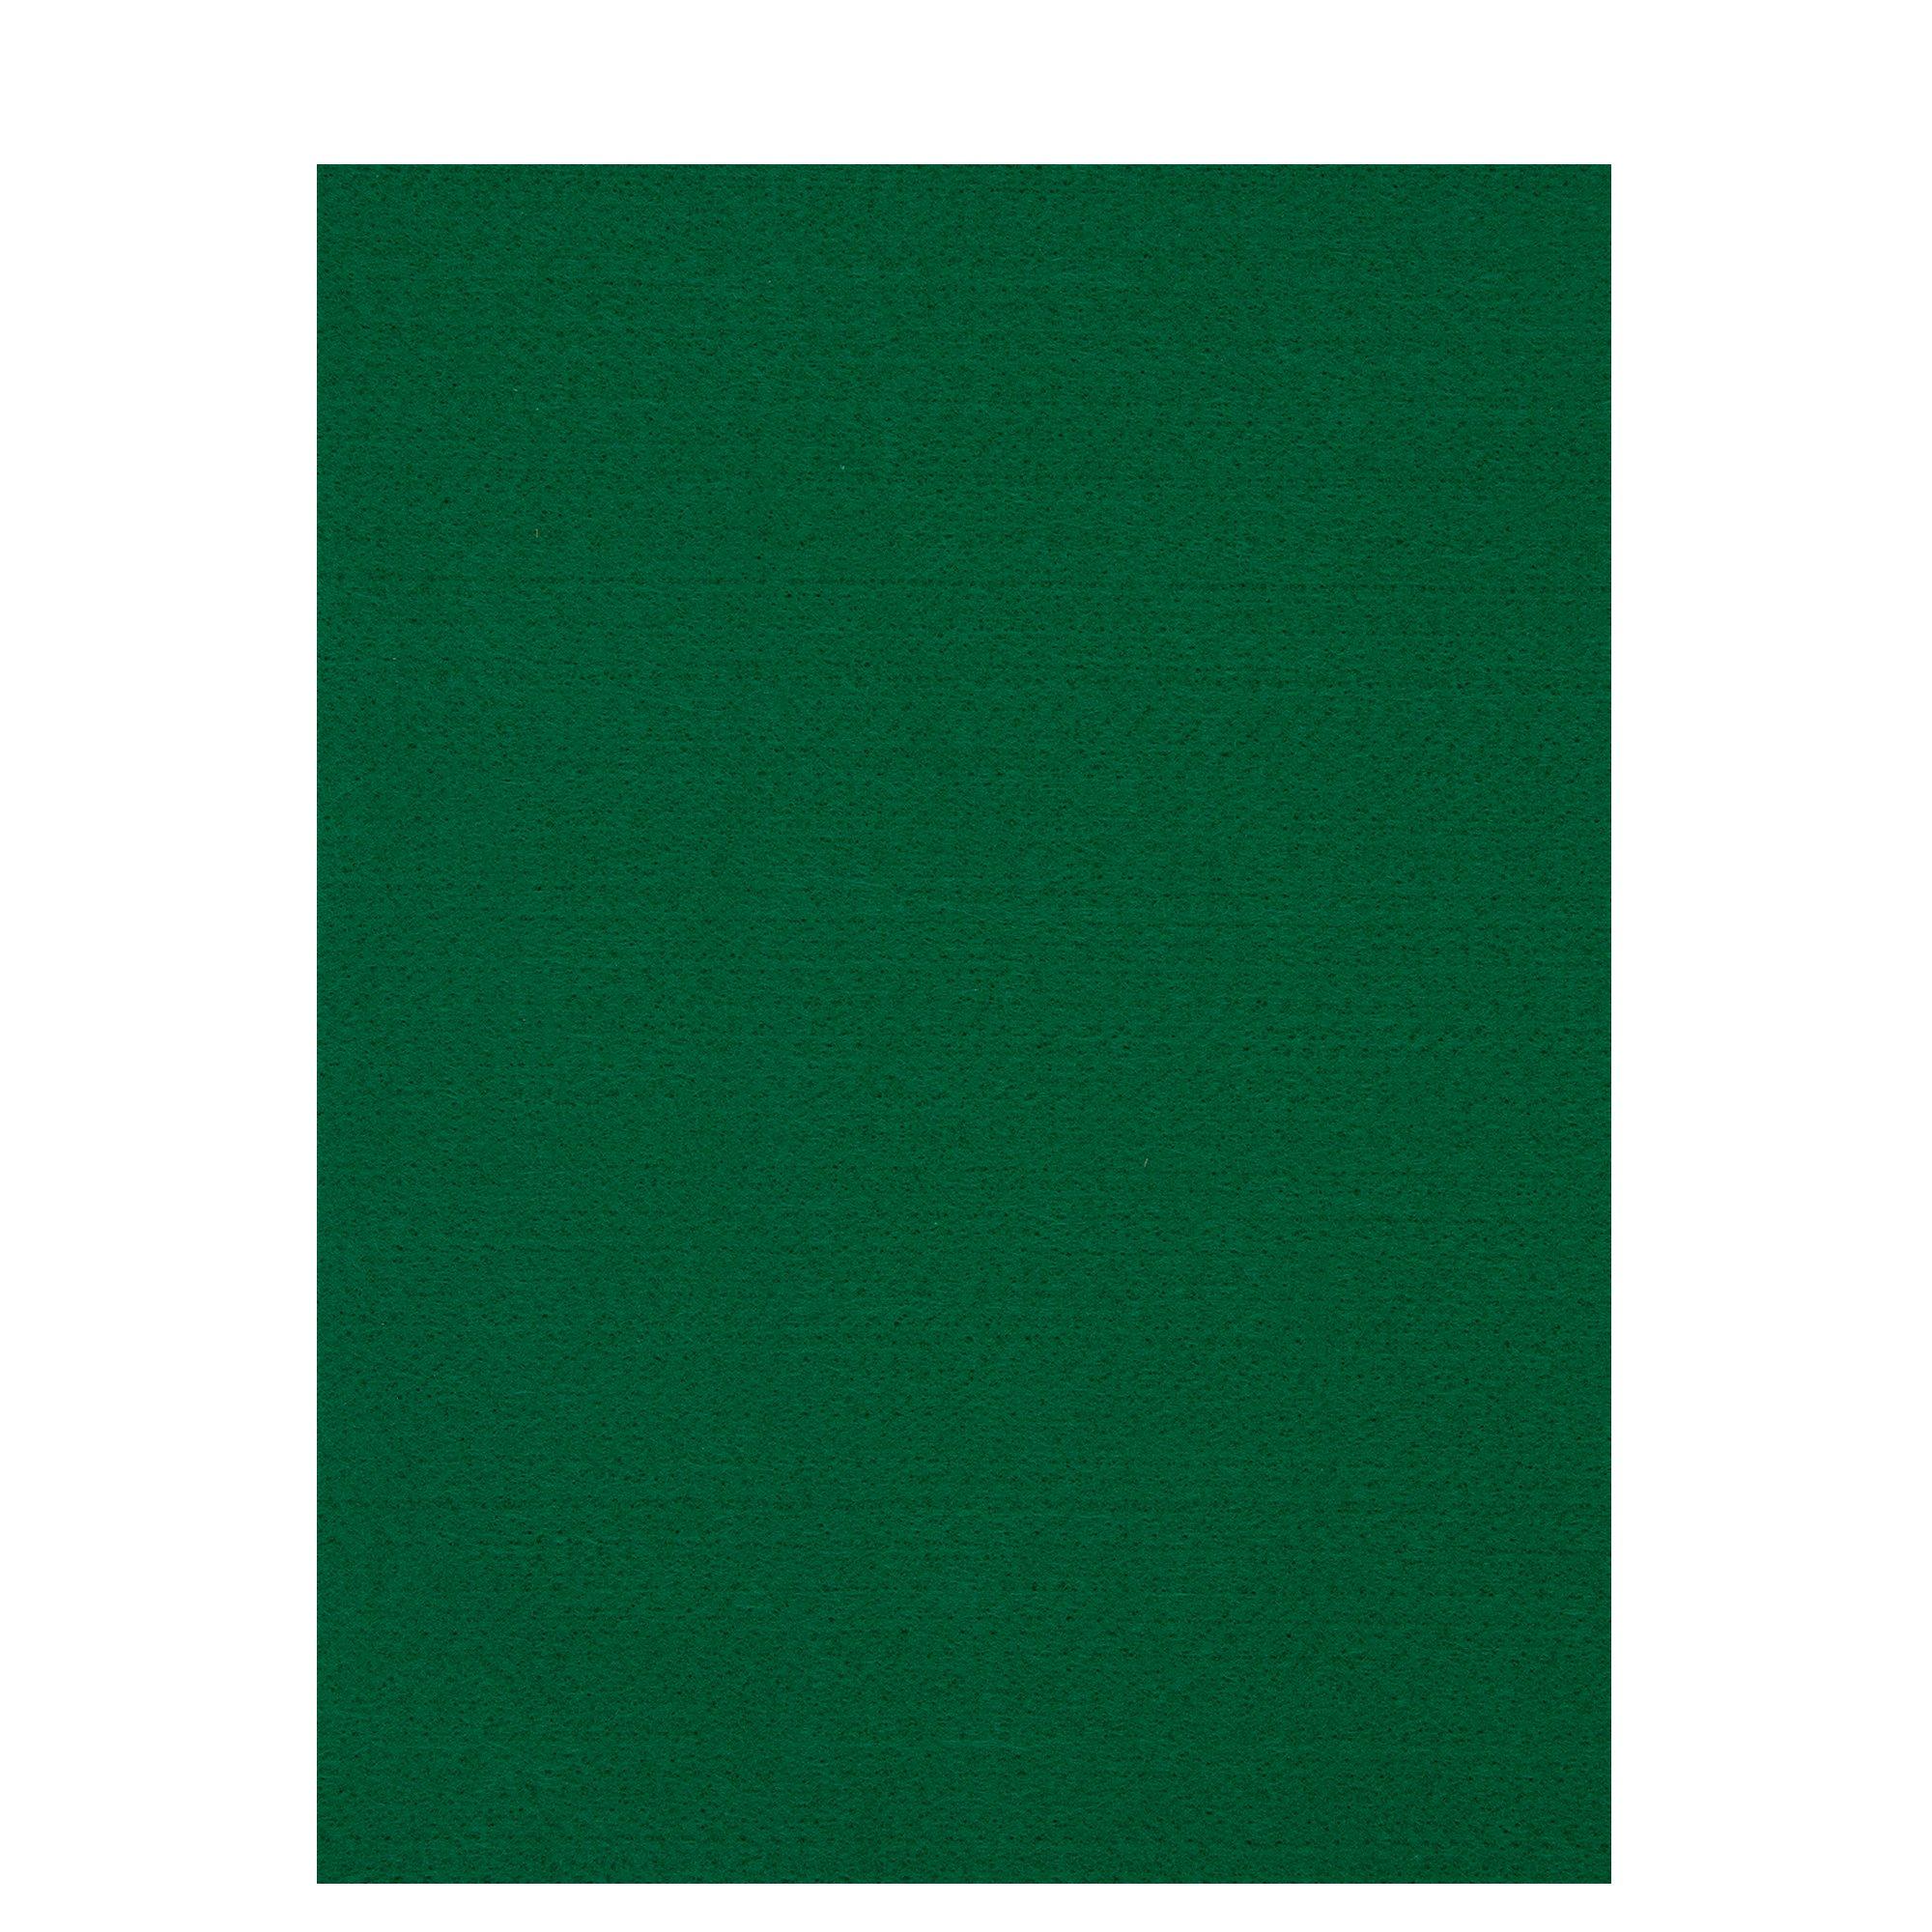 Green Felt Sheets, Self-Adhesive Felt Sheets, 90Pcs 4X4